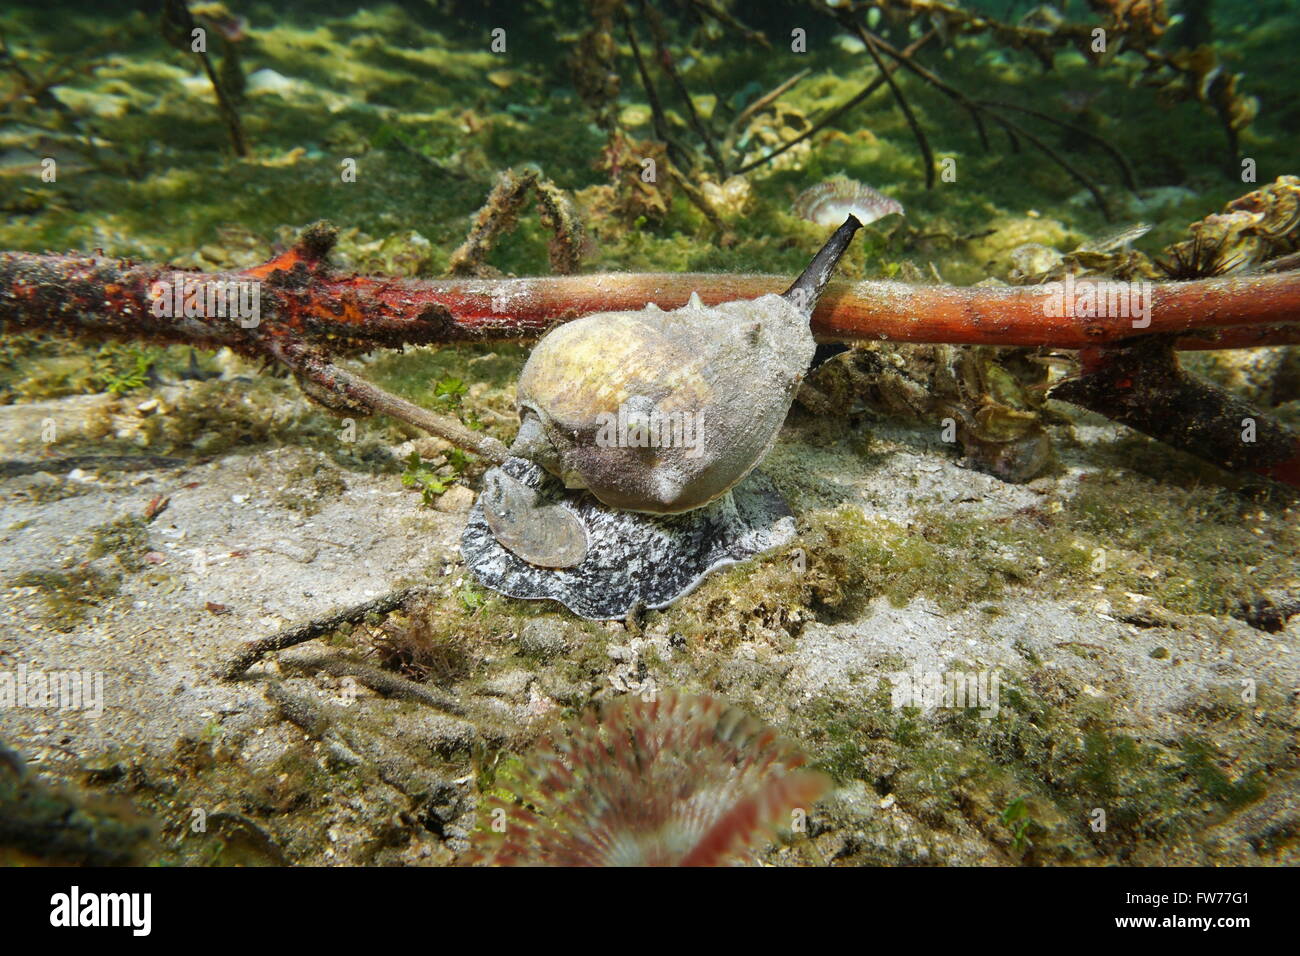 Caribbean crown conch sea snail, Melongena melongena, underwater on the seabed near the mangrove, Caribbean sea Stock Photo